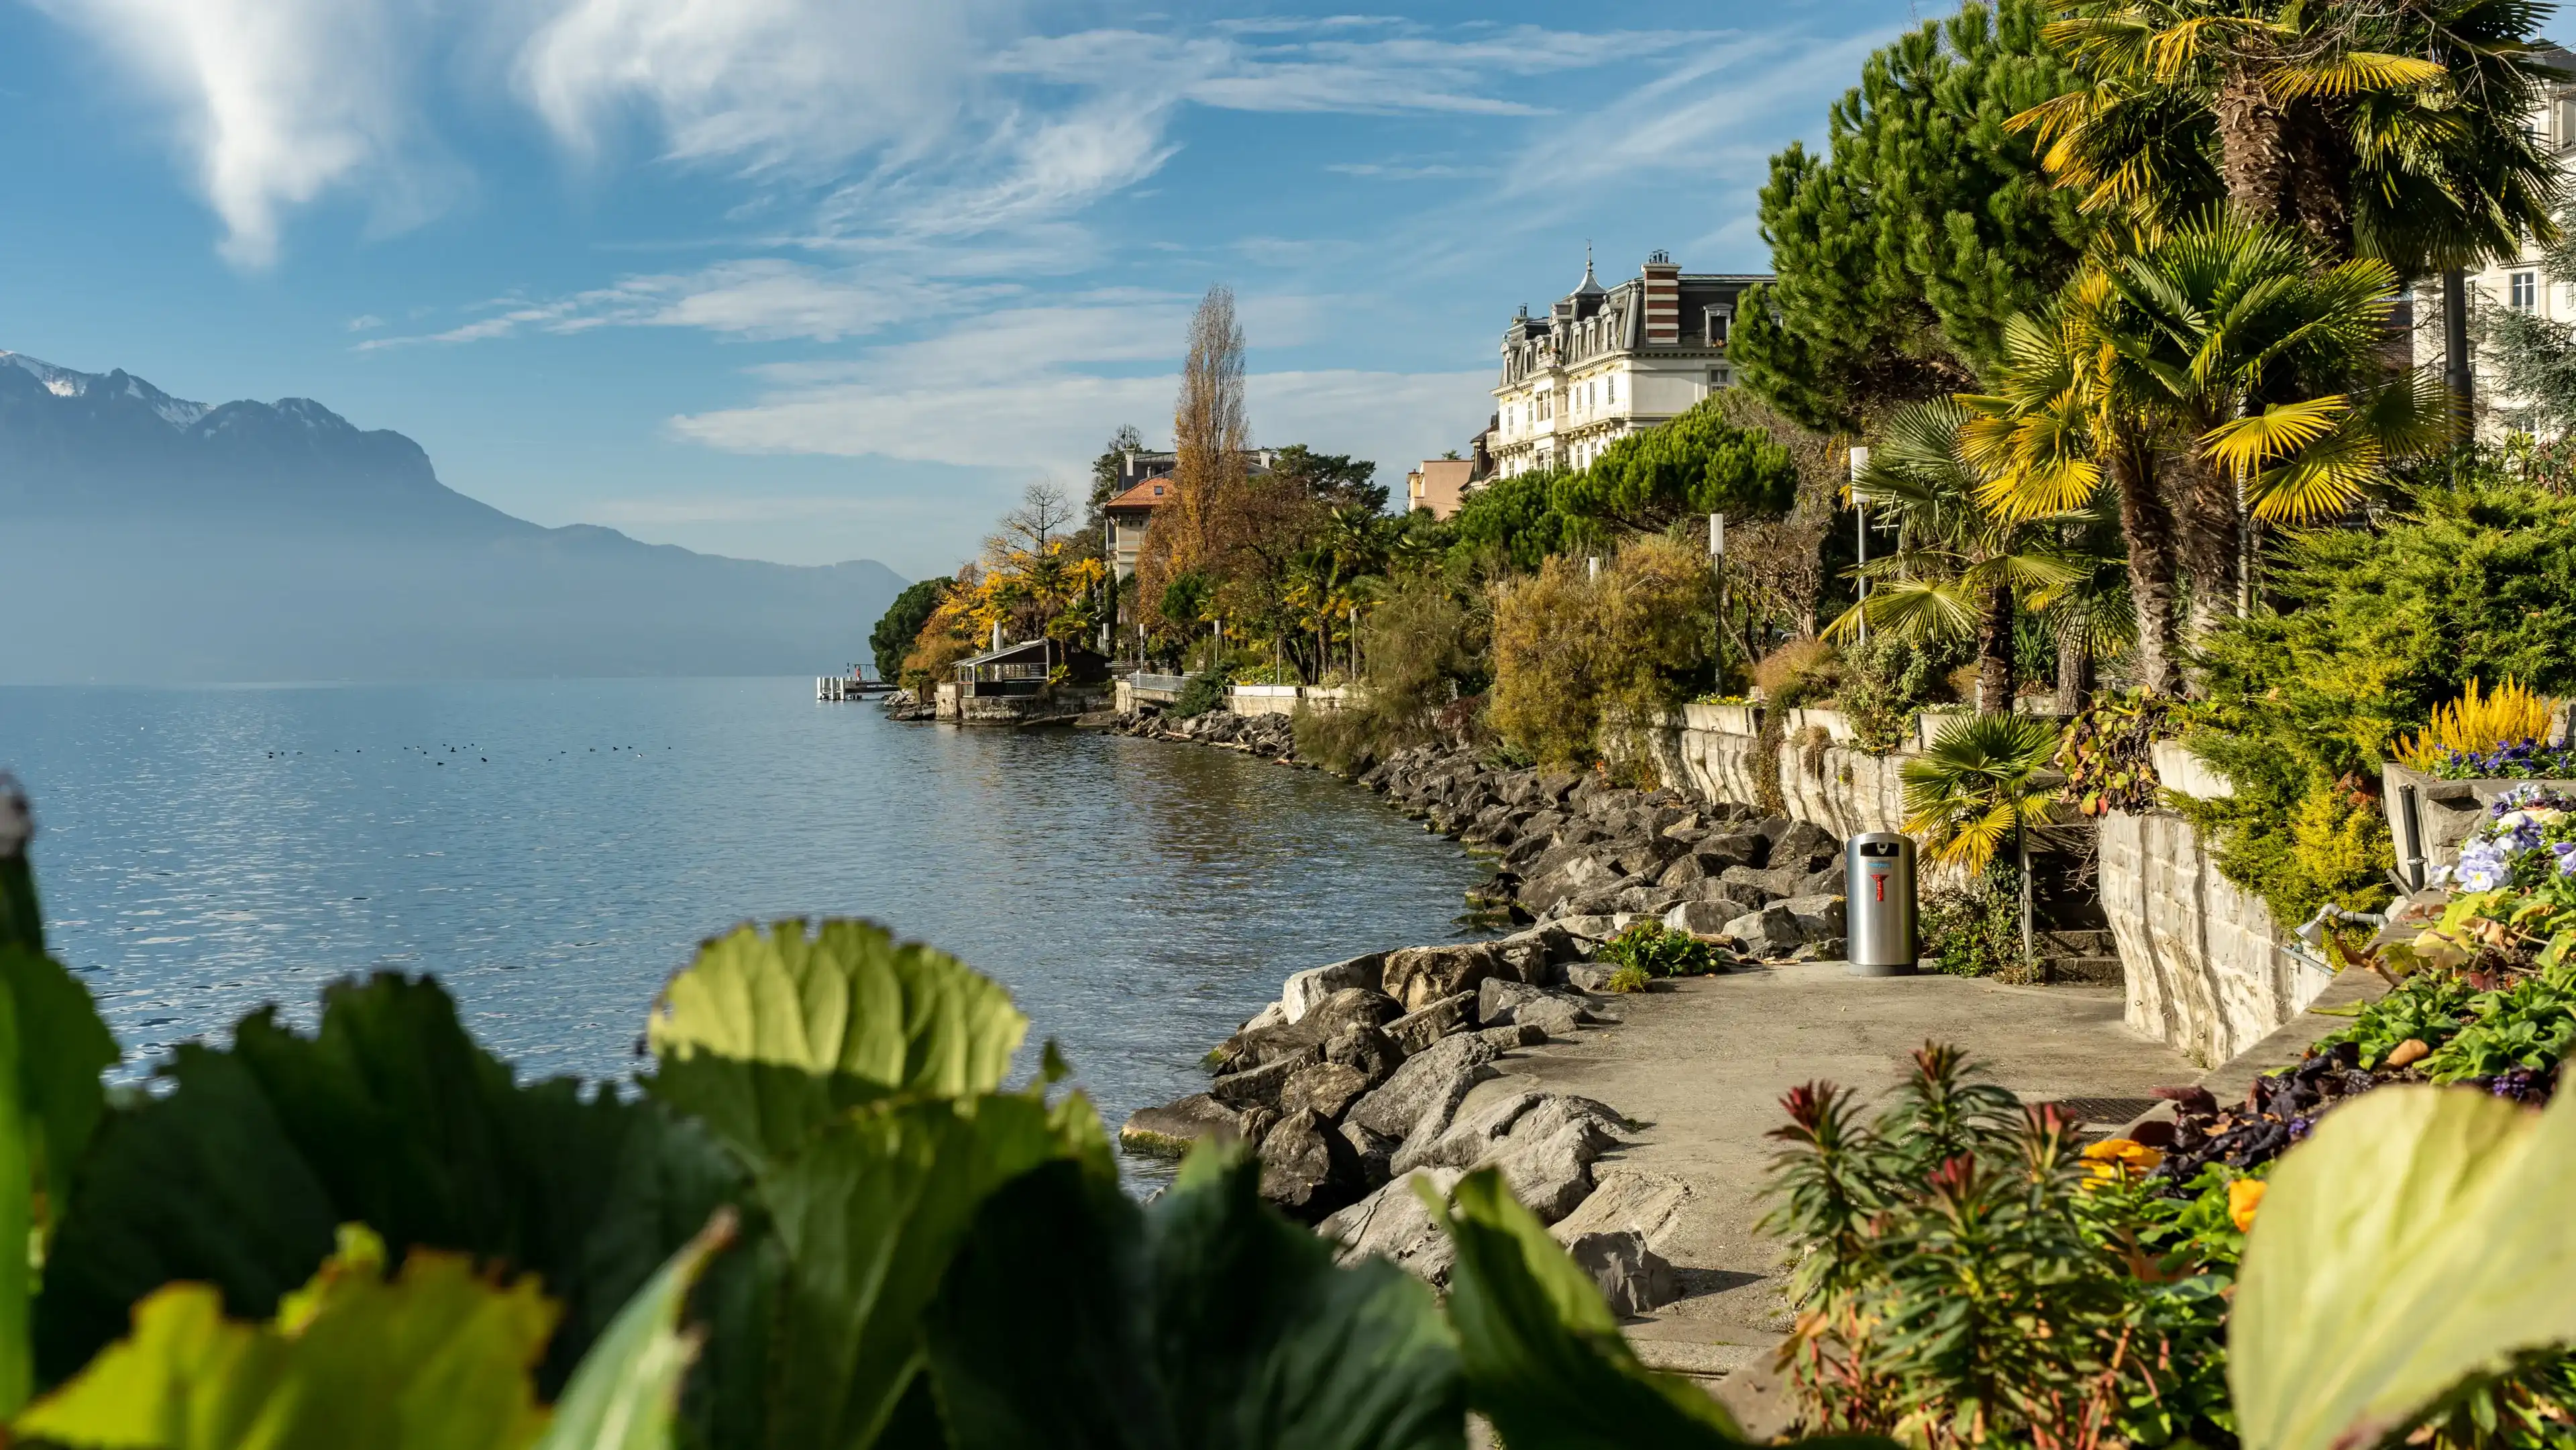 Best Montreux hotels. Cheap hotels in Montreux, Switzerland